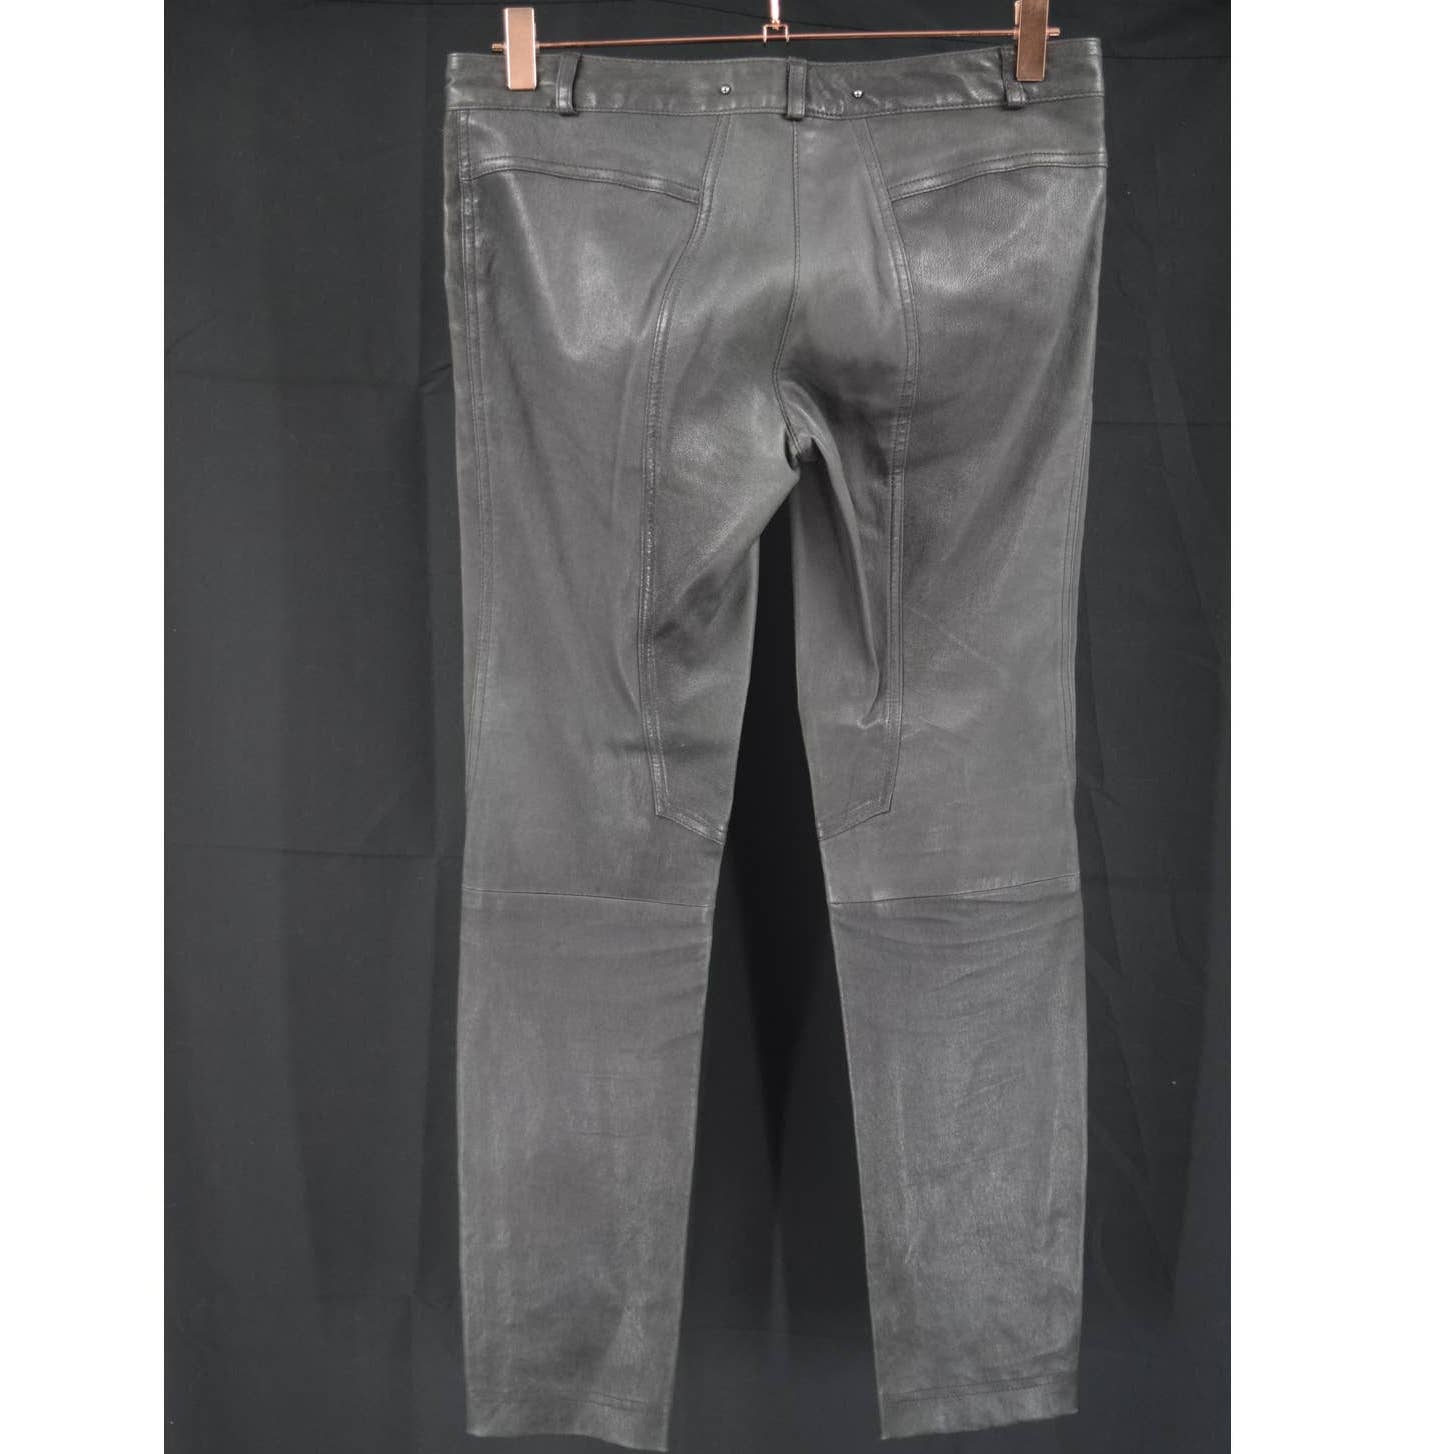 Barbara Bui Gray Lamb Leather Pants - 40 / S